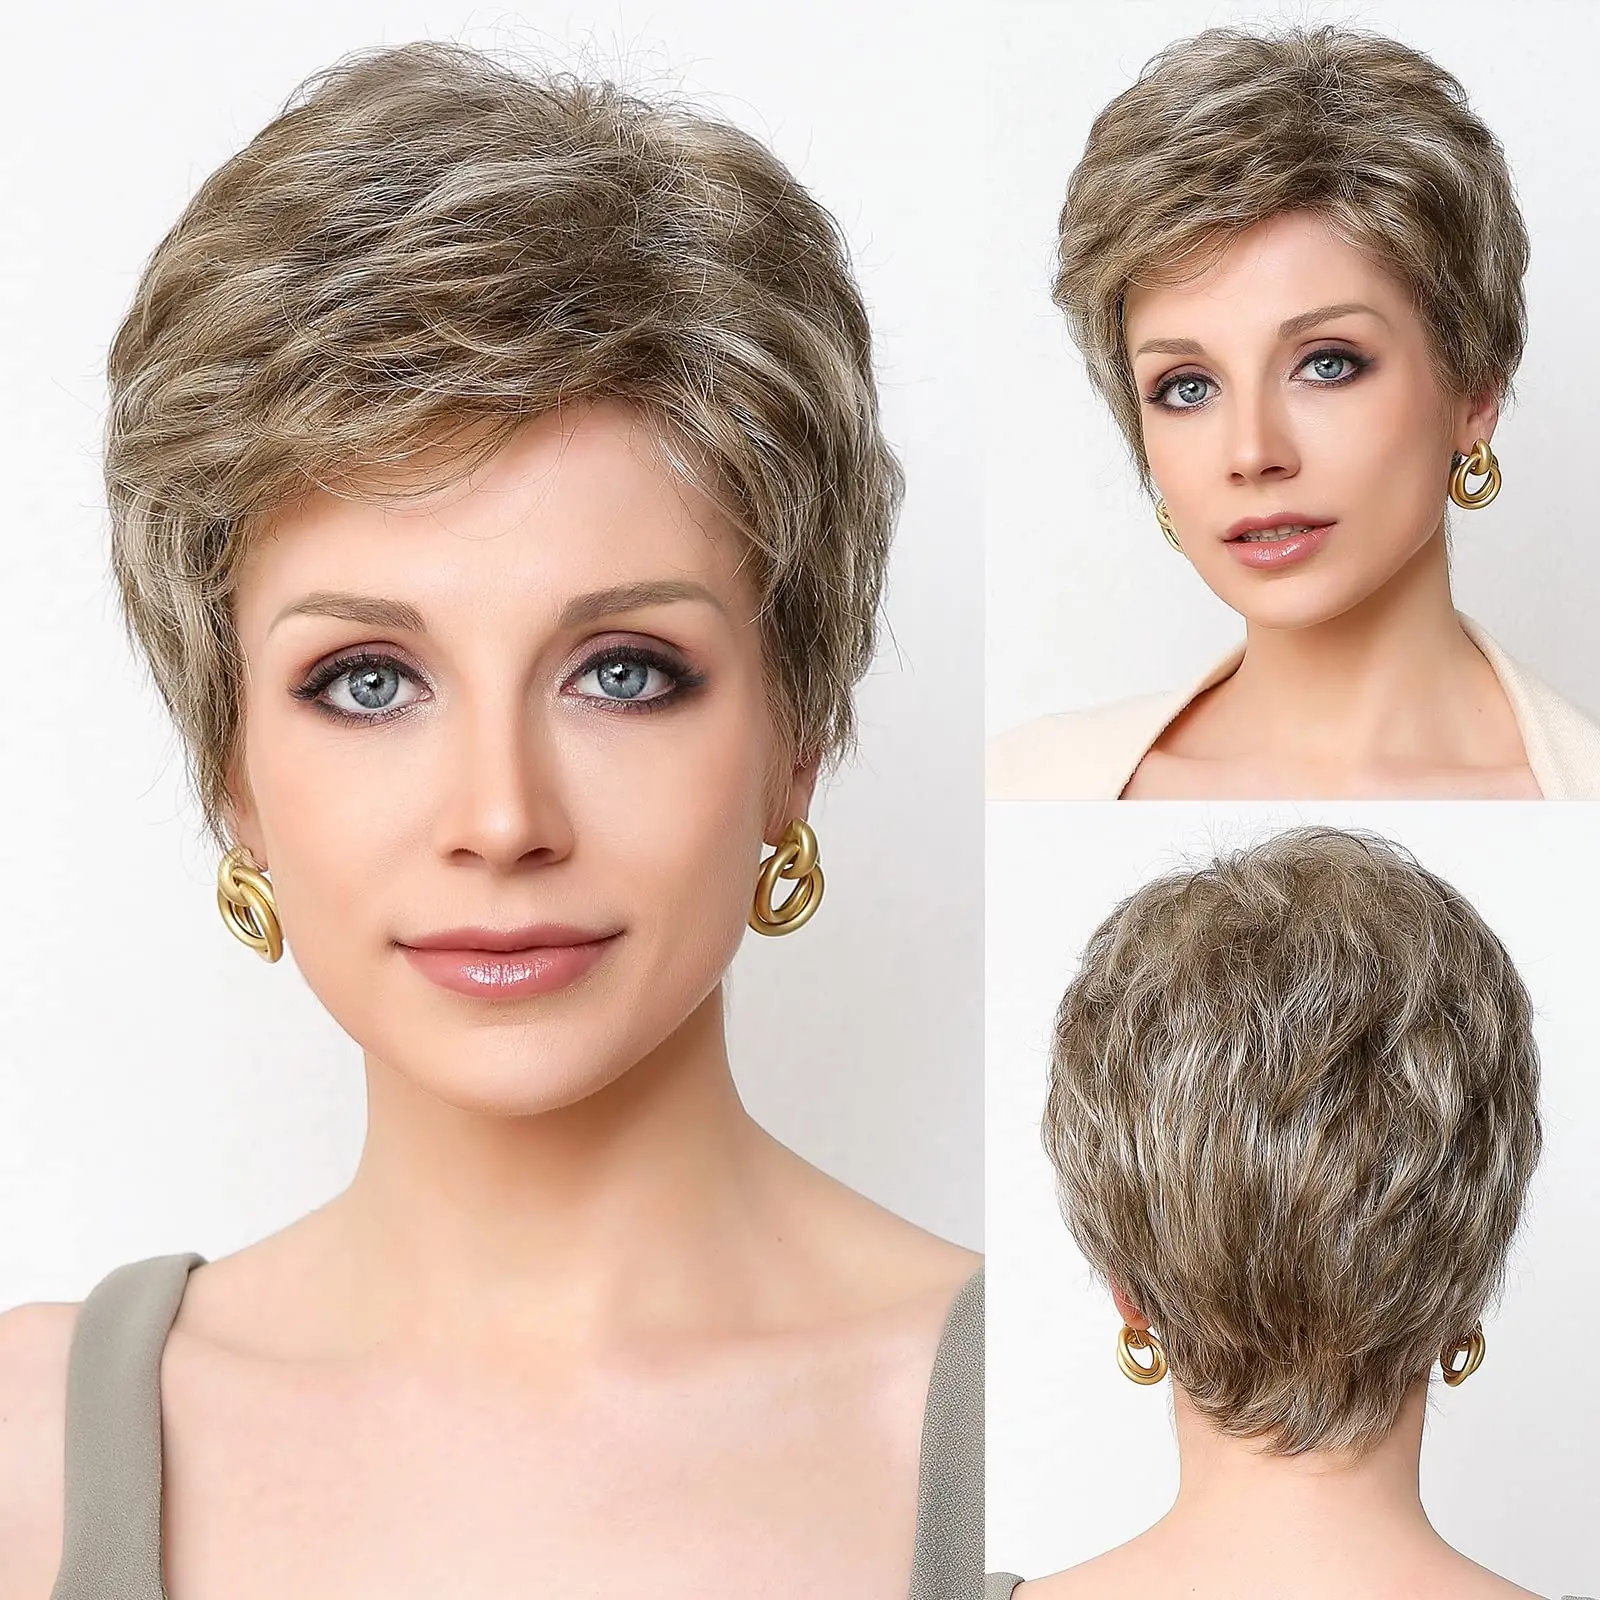 

Bob Blonde Mixed Gray Wigs for Women Short Layered Wig With Bangs Natural Daily Blend Hair Wig Kanekalon Synthetic Women Wig Use